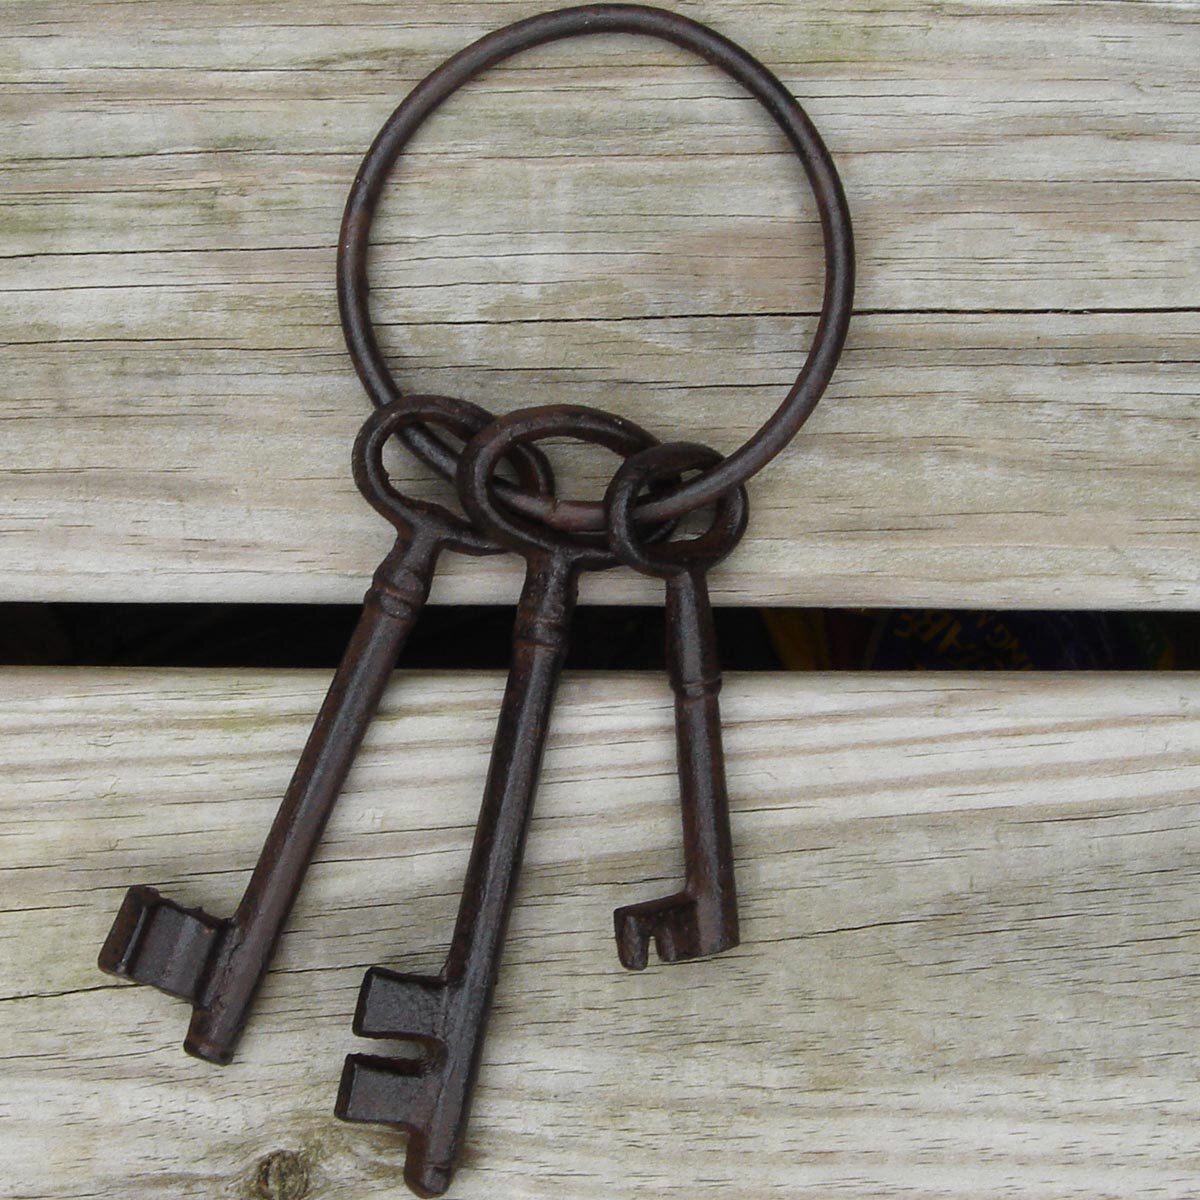 Skeleton keys Rustic Cast Iron metal Pirate Jail vintage reproduction prison